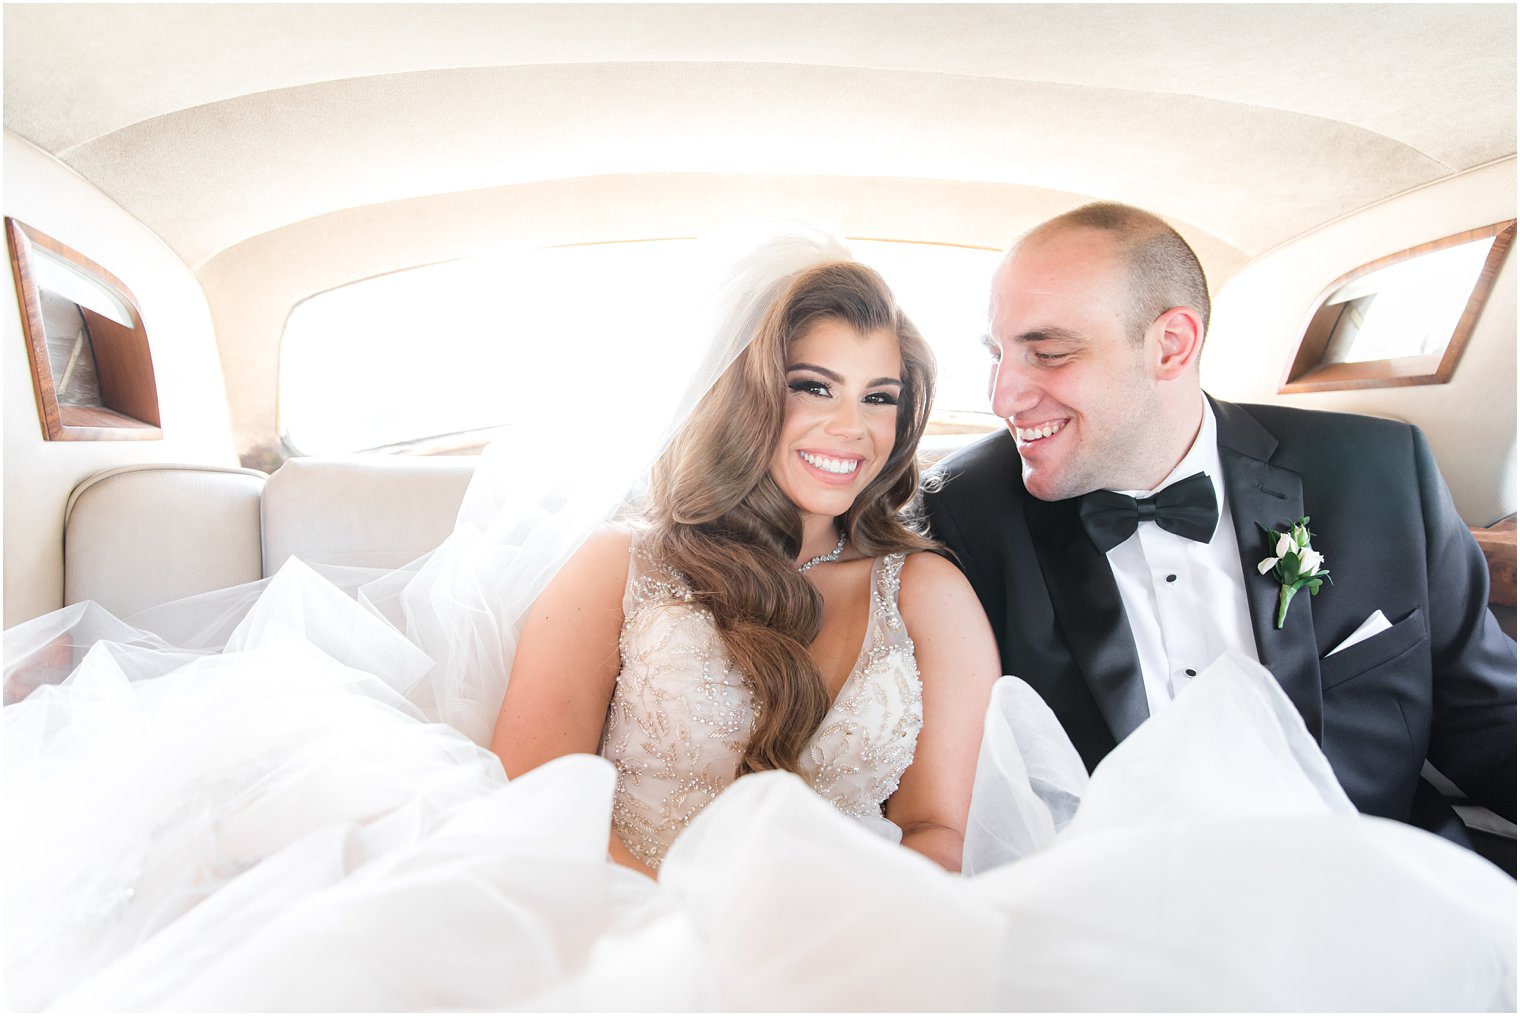 Bride and groom in Rolls Royce